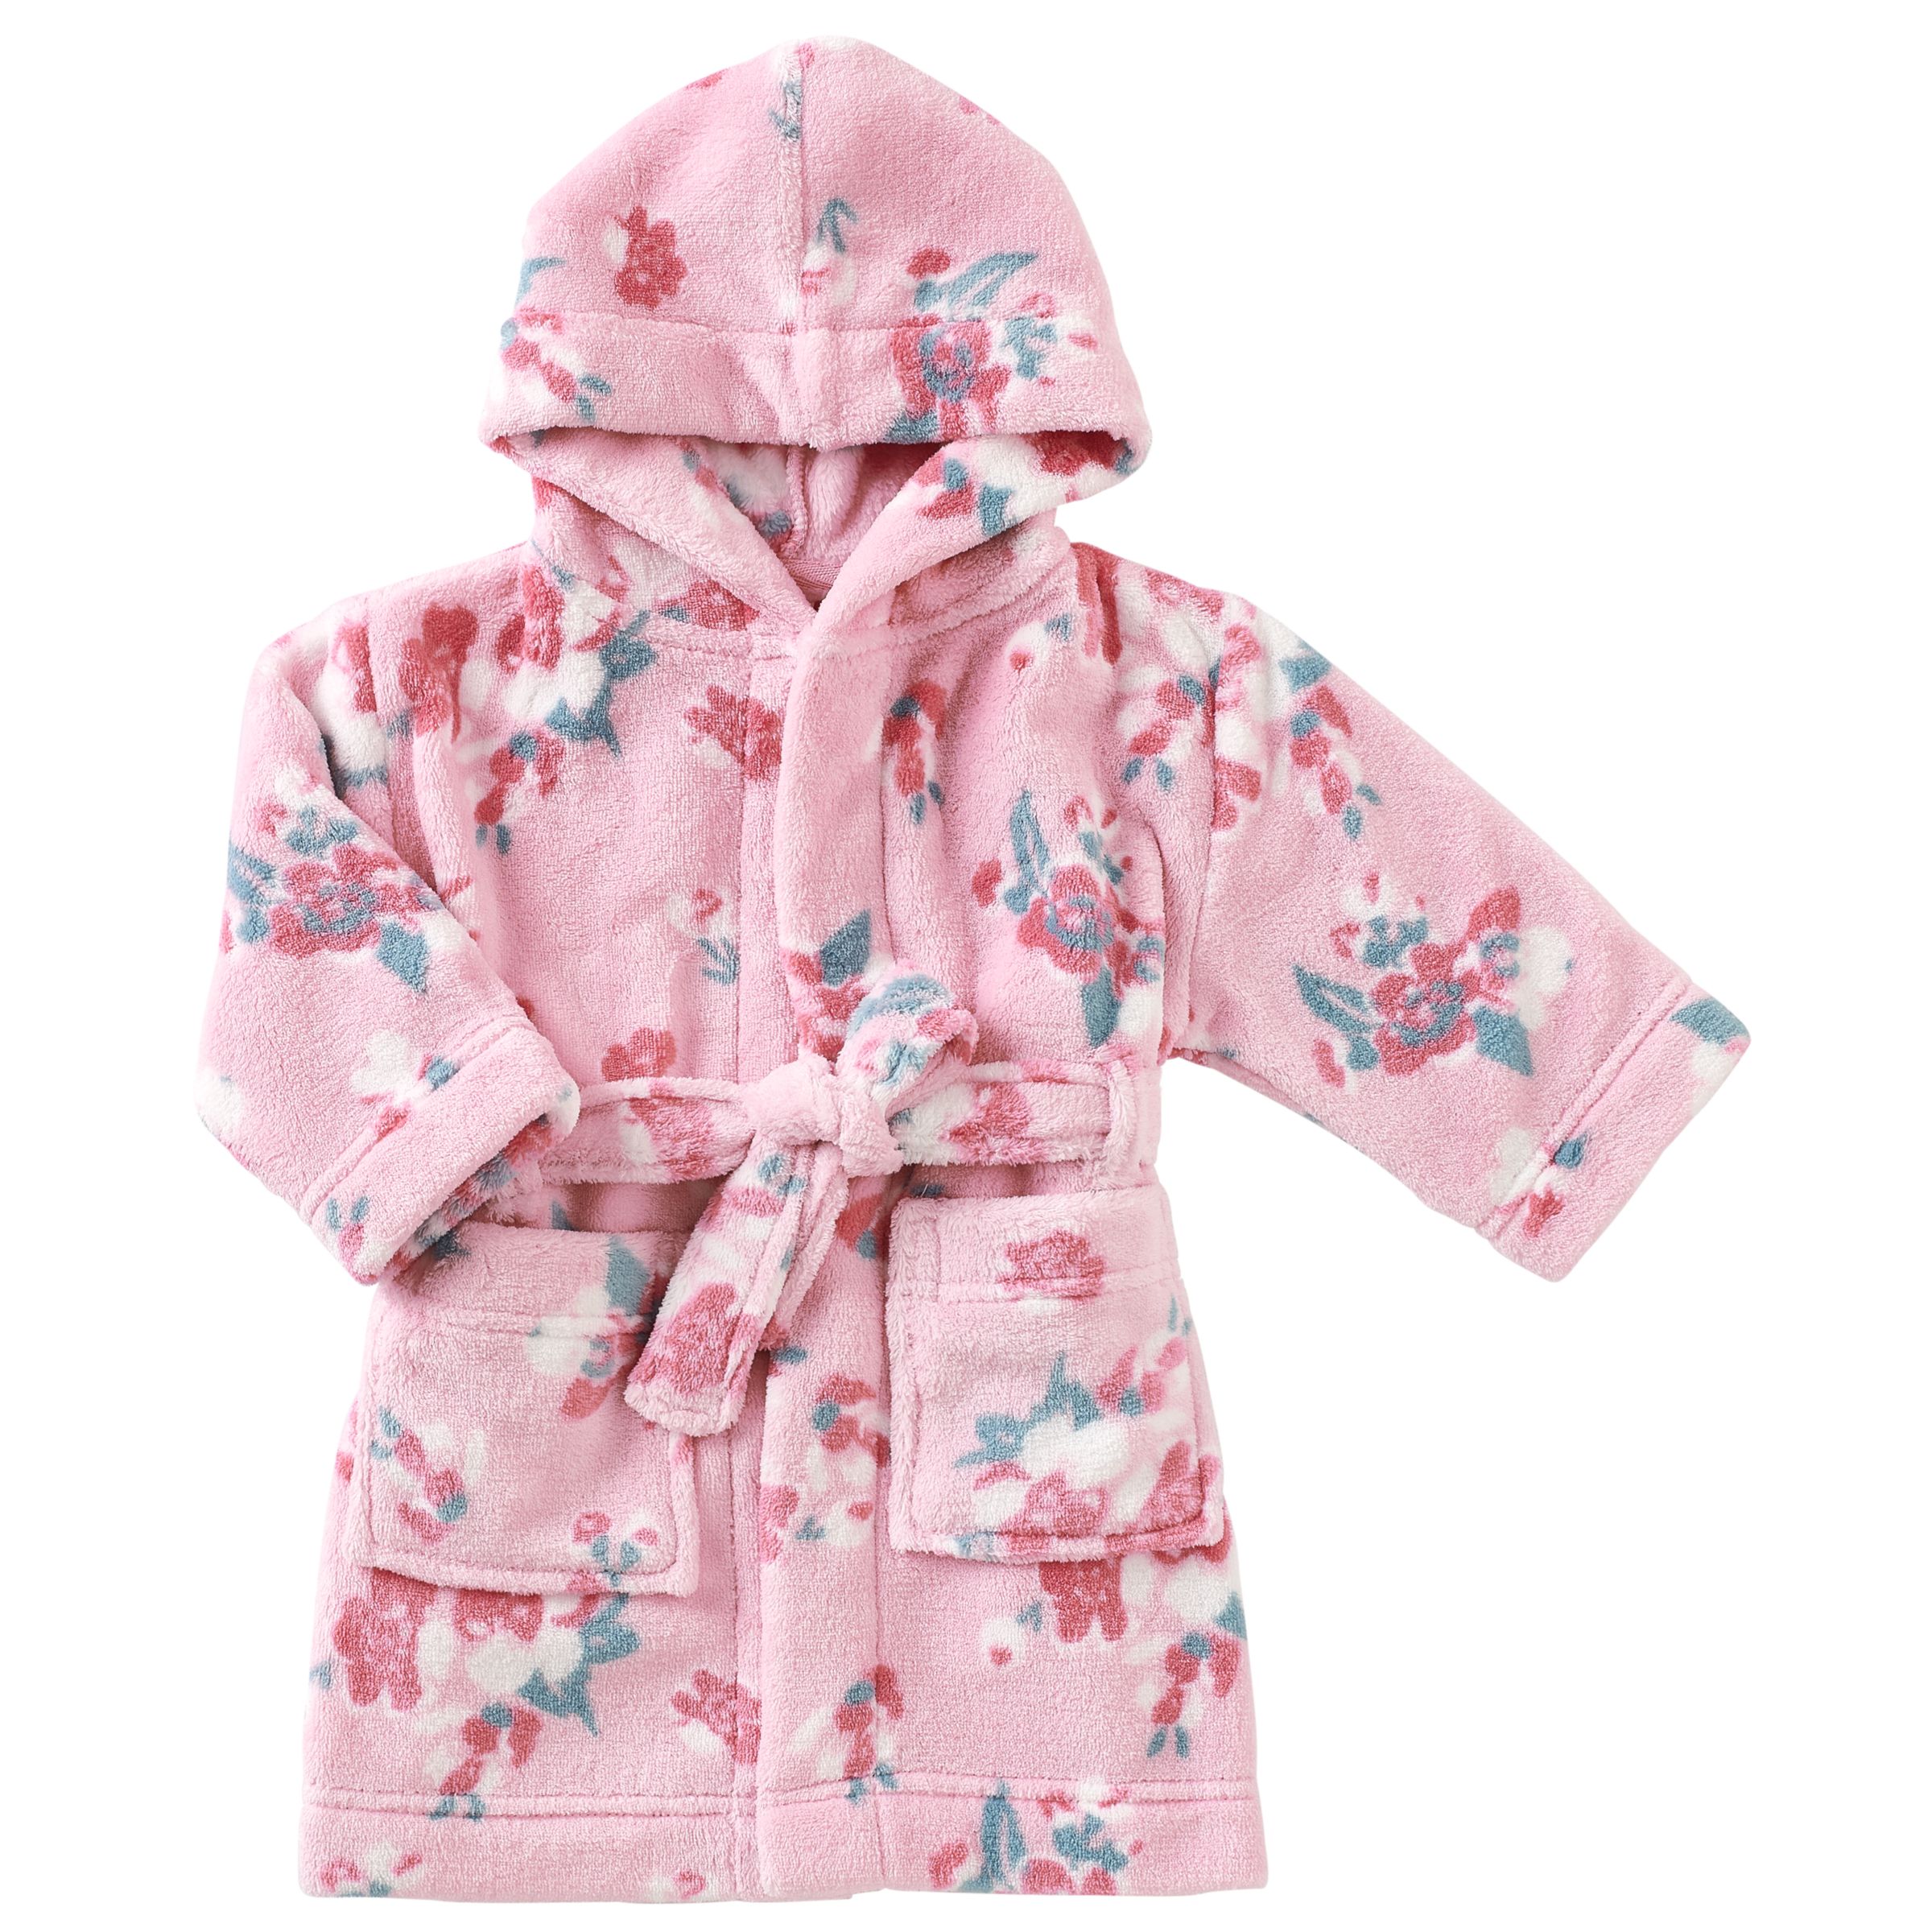 John Lewis & Partners Baby Floral Robe, Pink